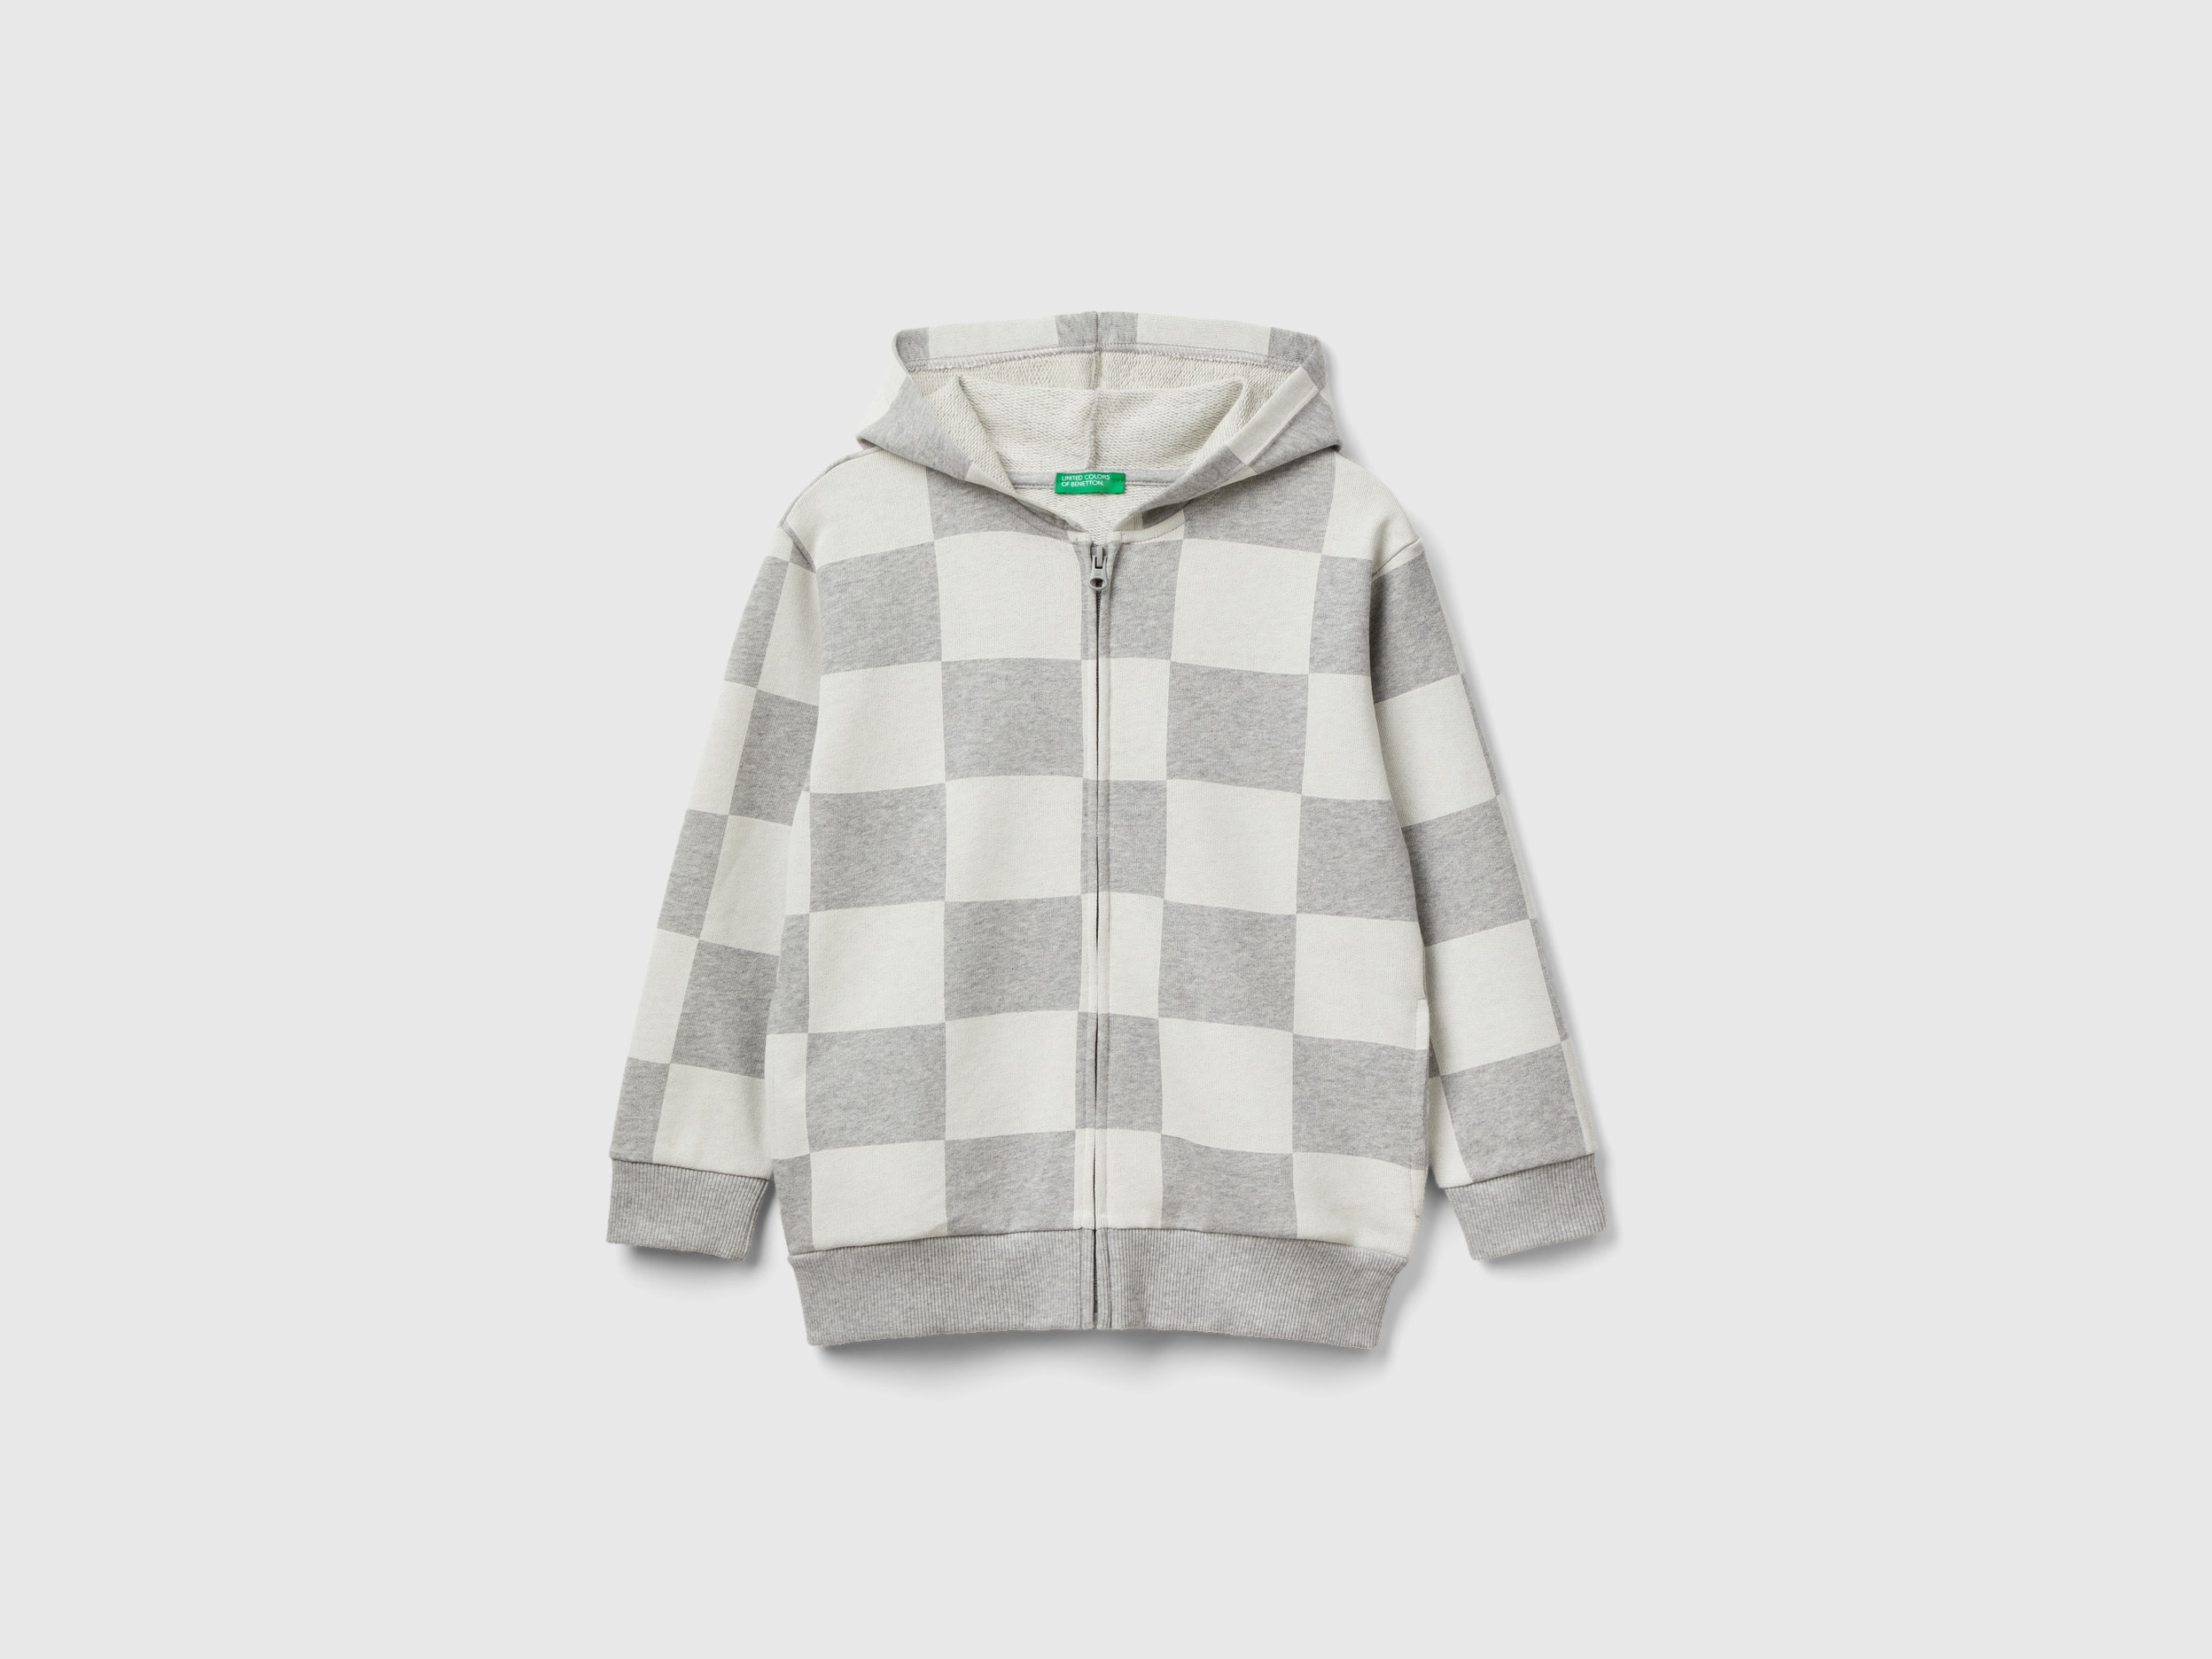 Benetton, Checkered Hoodie, size S, Light Gray, Kids